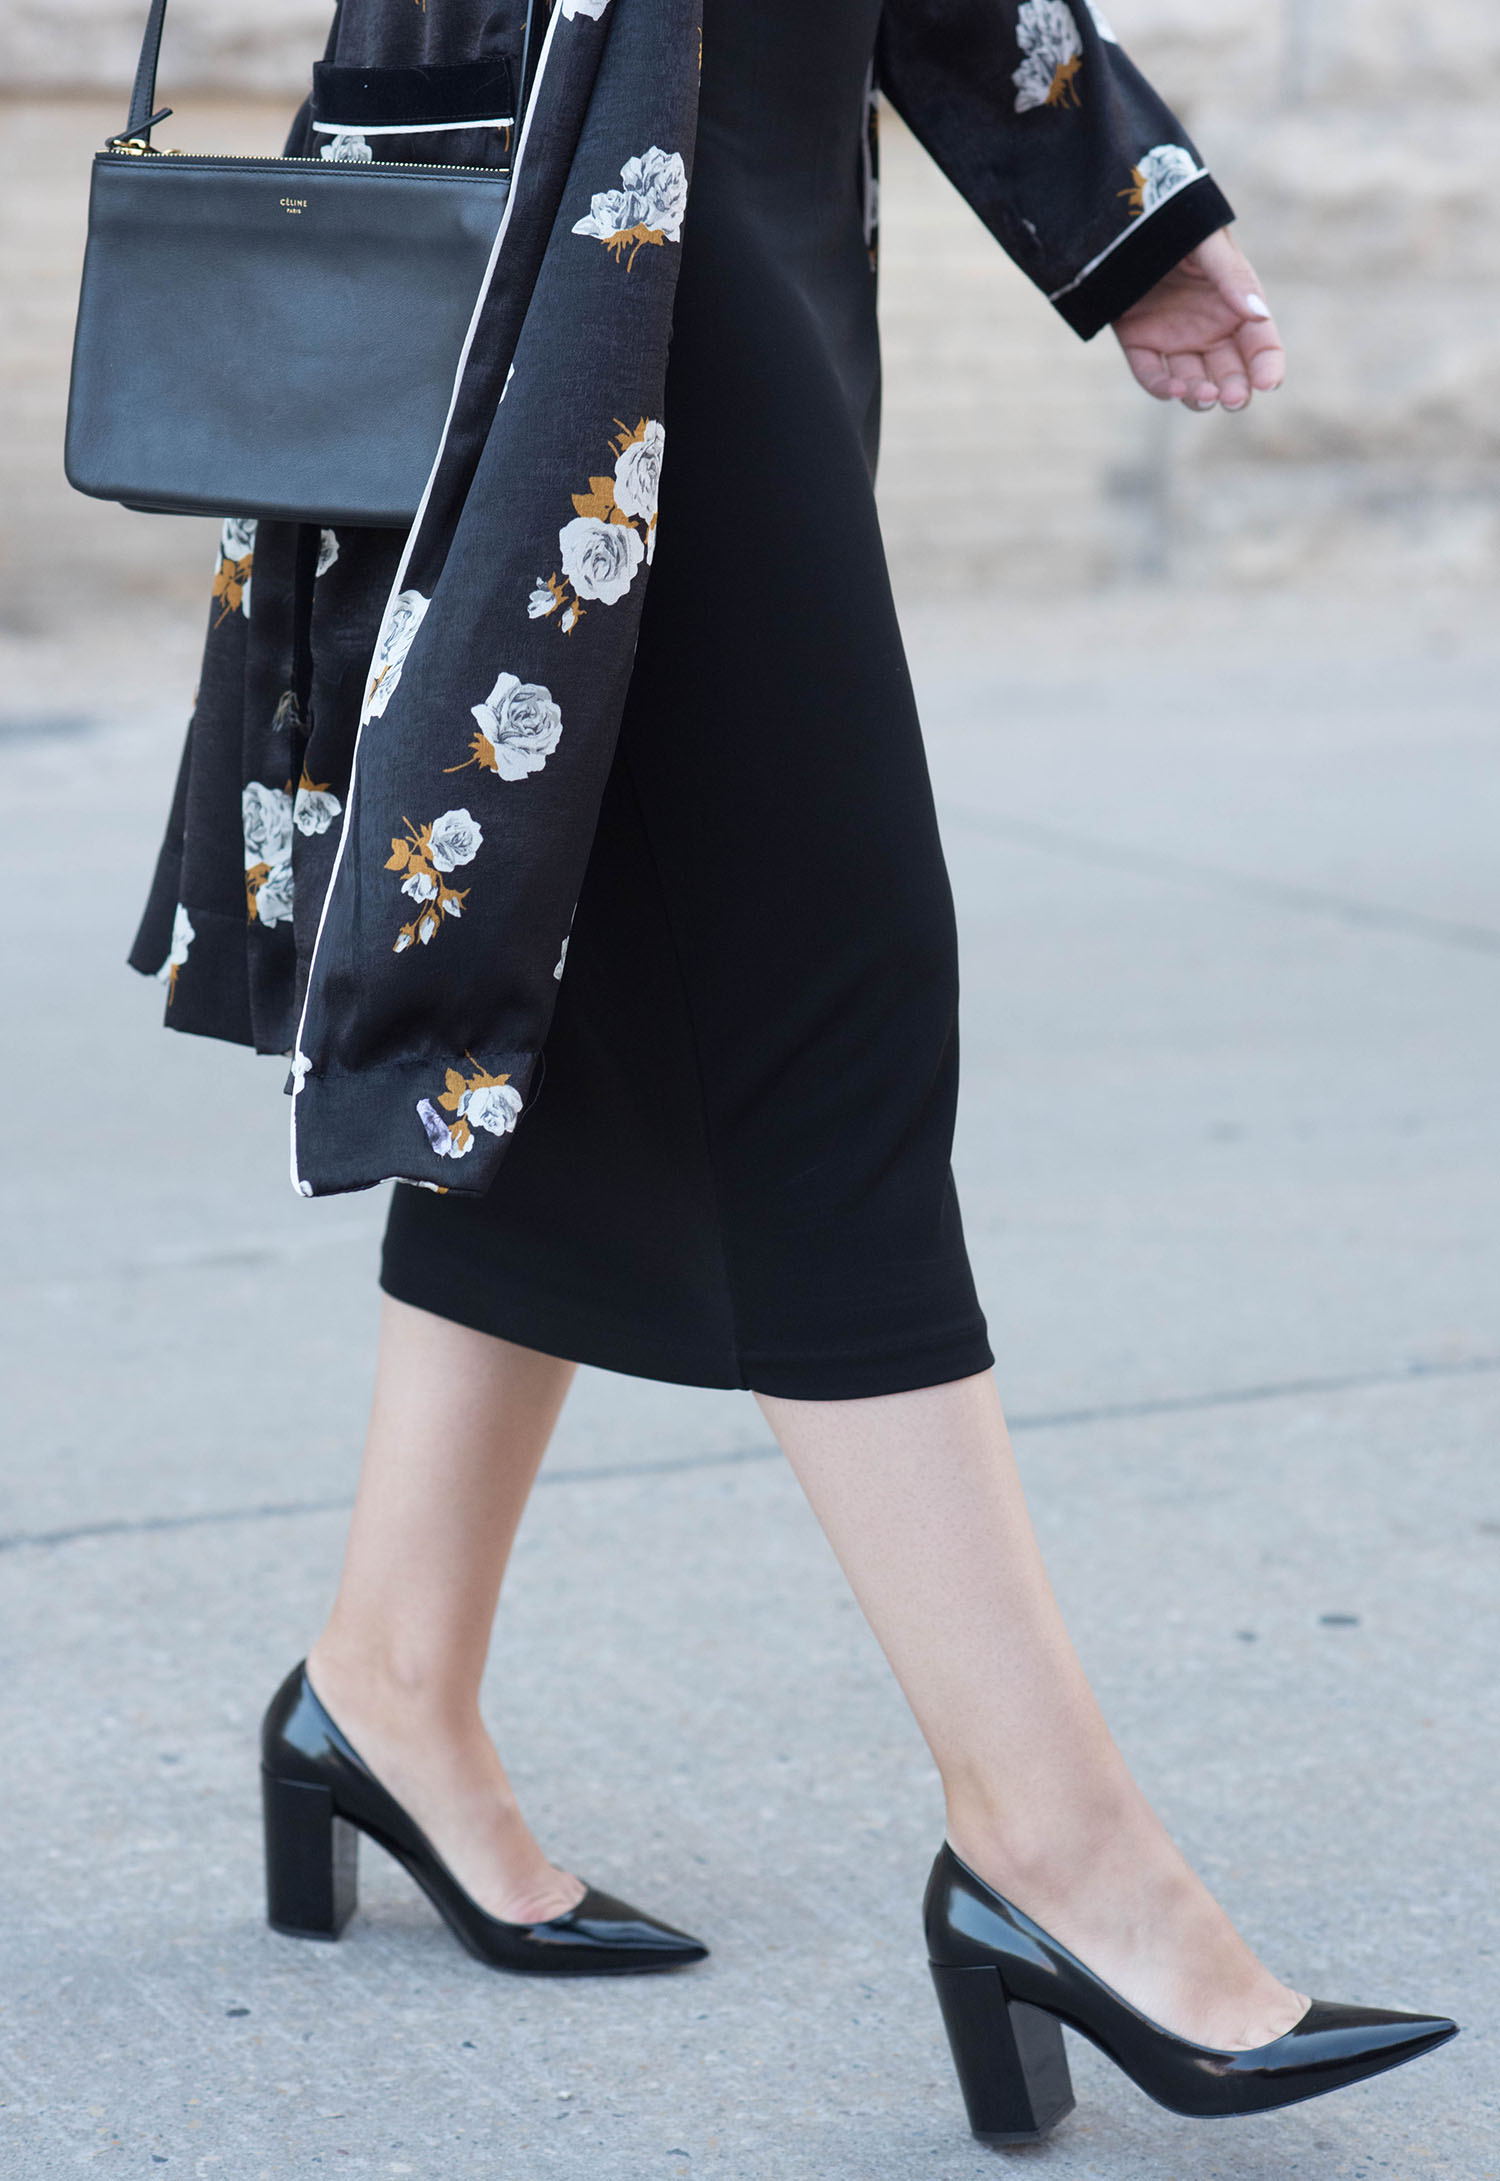 Outfit details on Winnipeg fashion blogger Cee Fardoe of Coco & Vera, wearing a Celine trio bag, Zara combined kimono and Pierre Hardy block heels